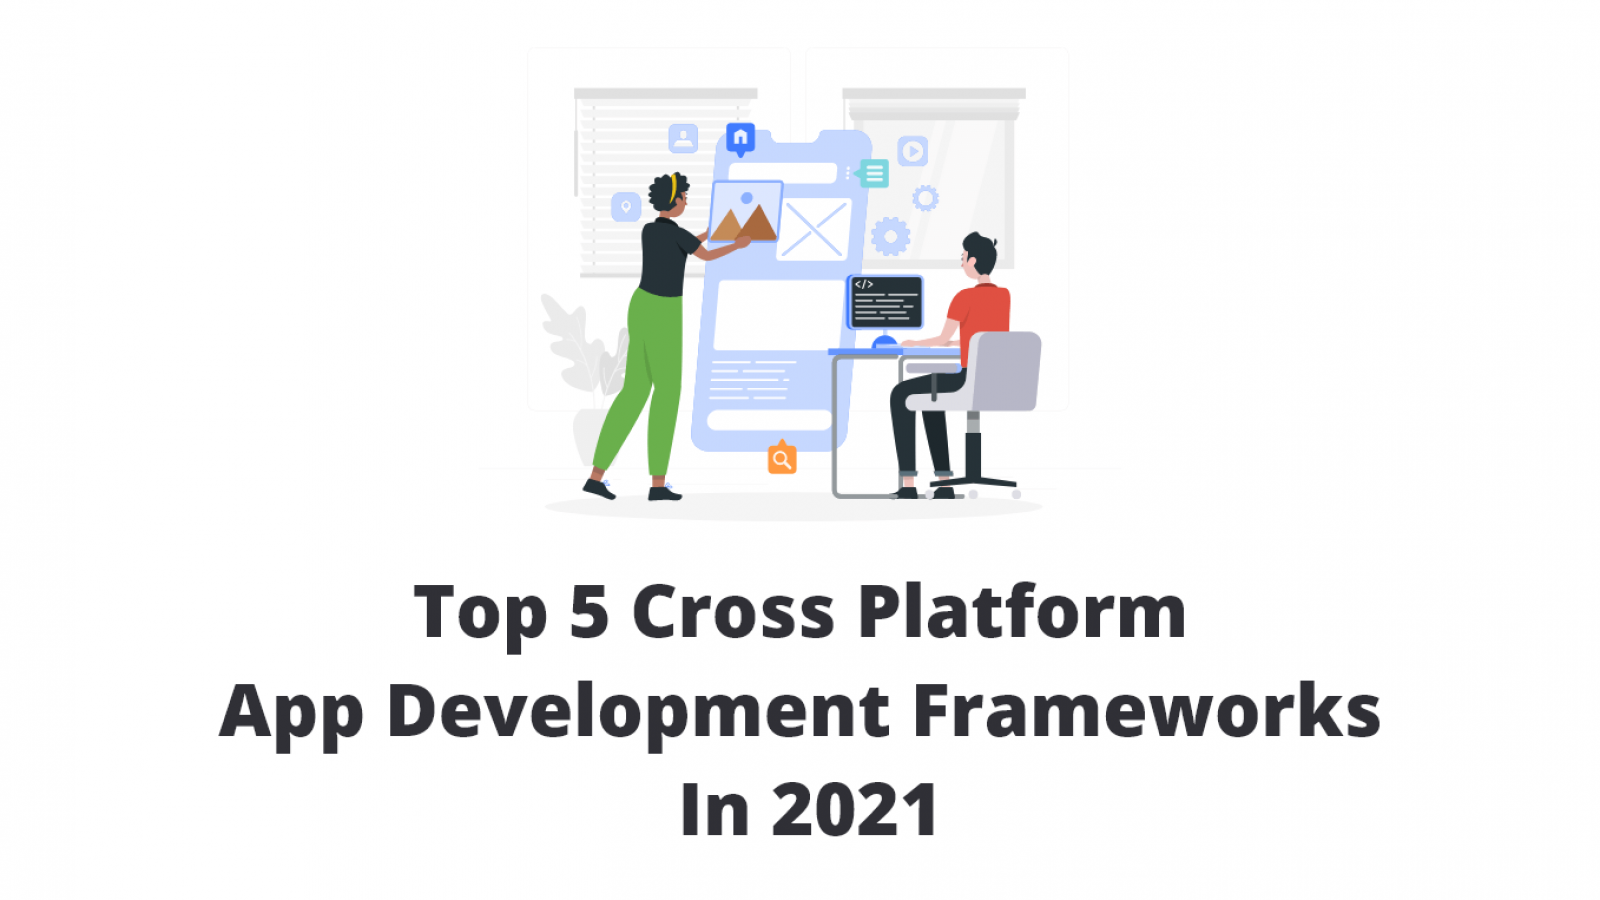 Cross-Platform Mobile App Development Frameworks